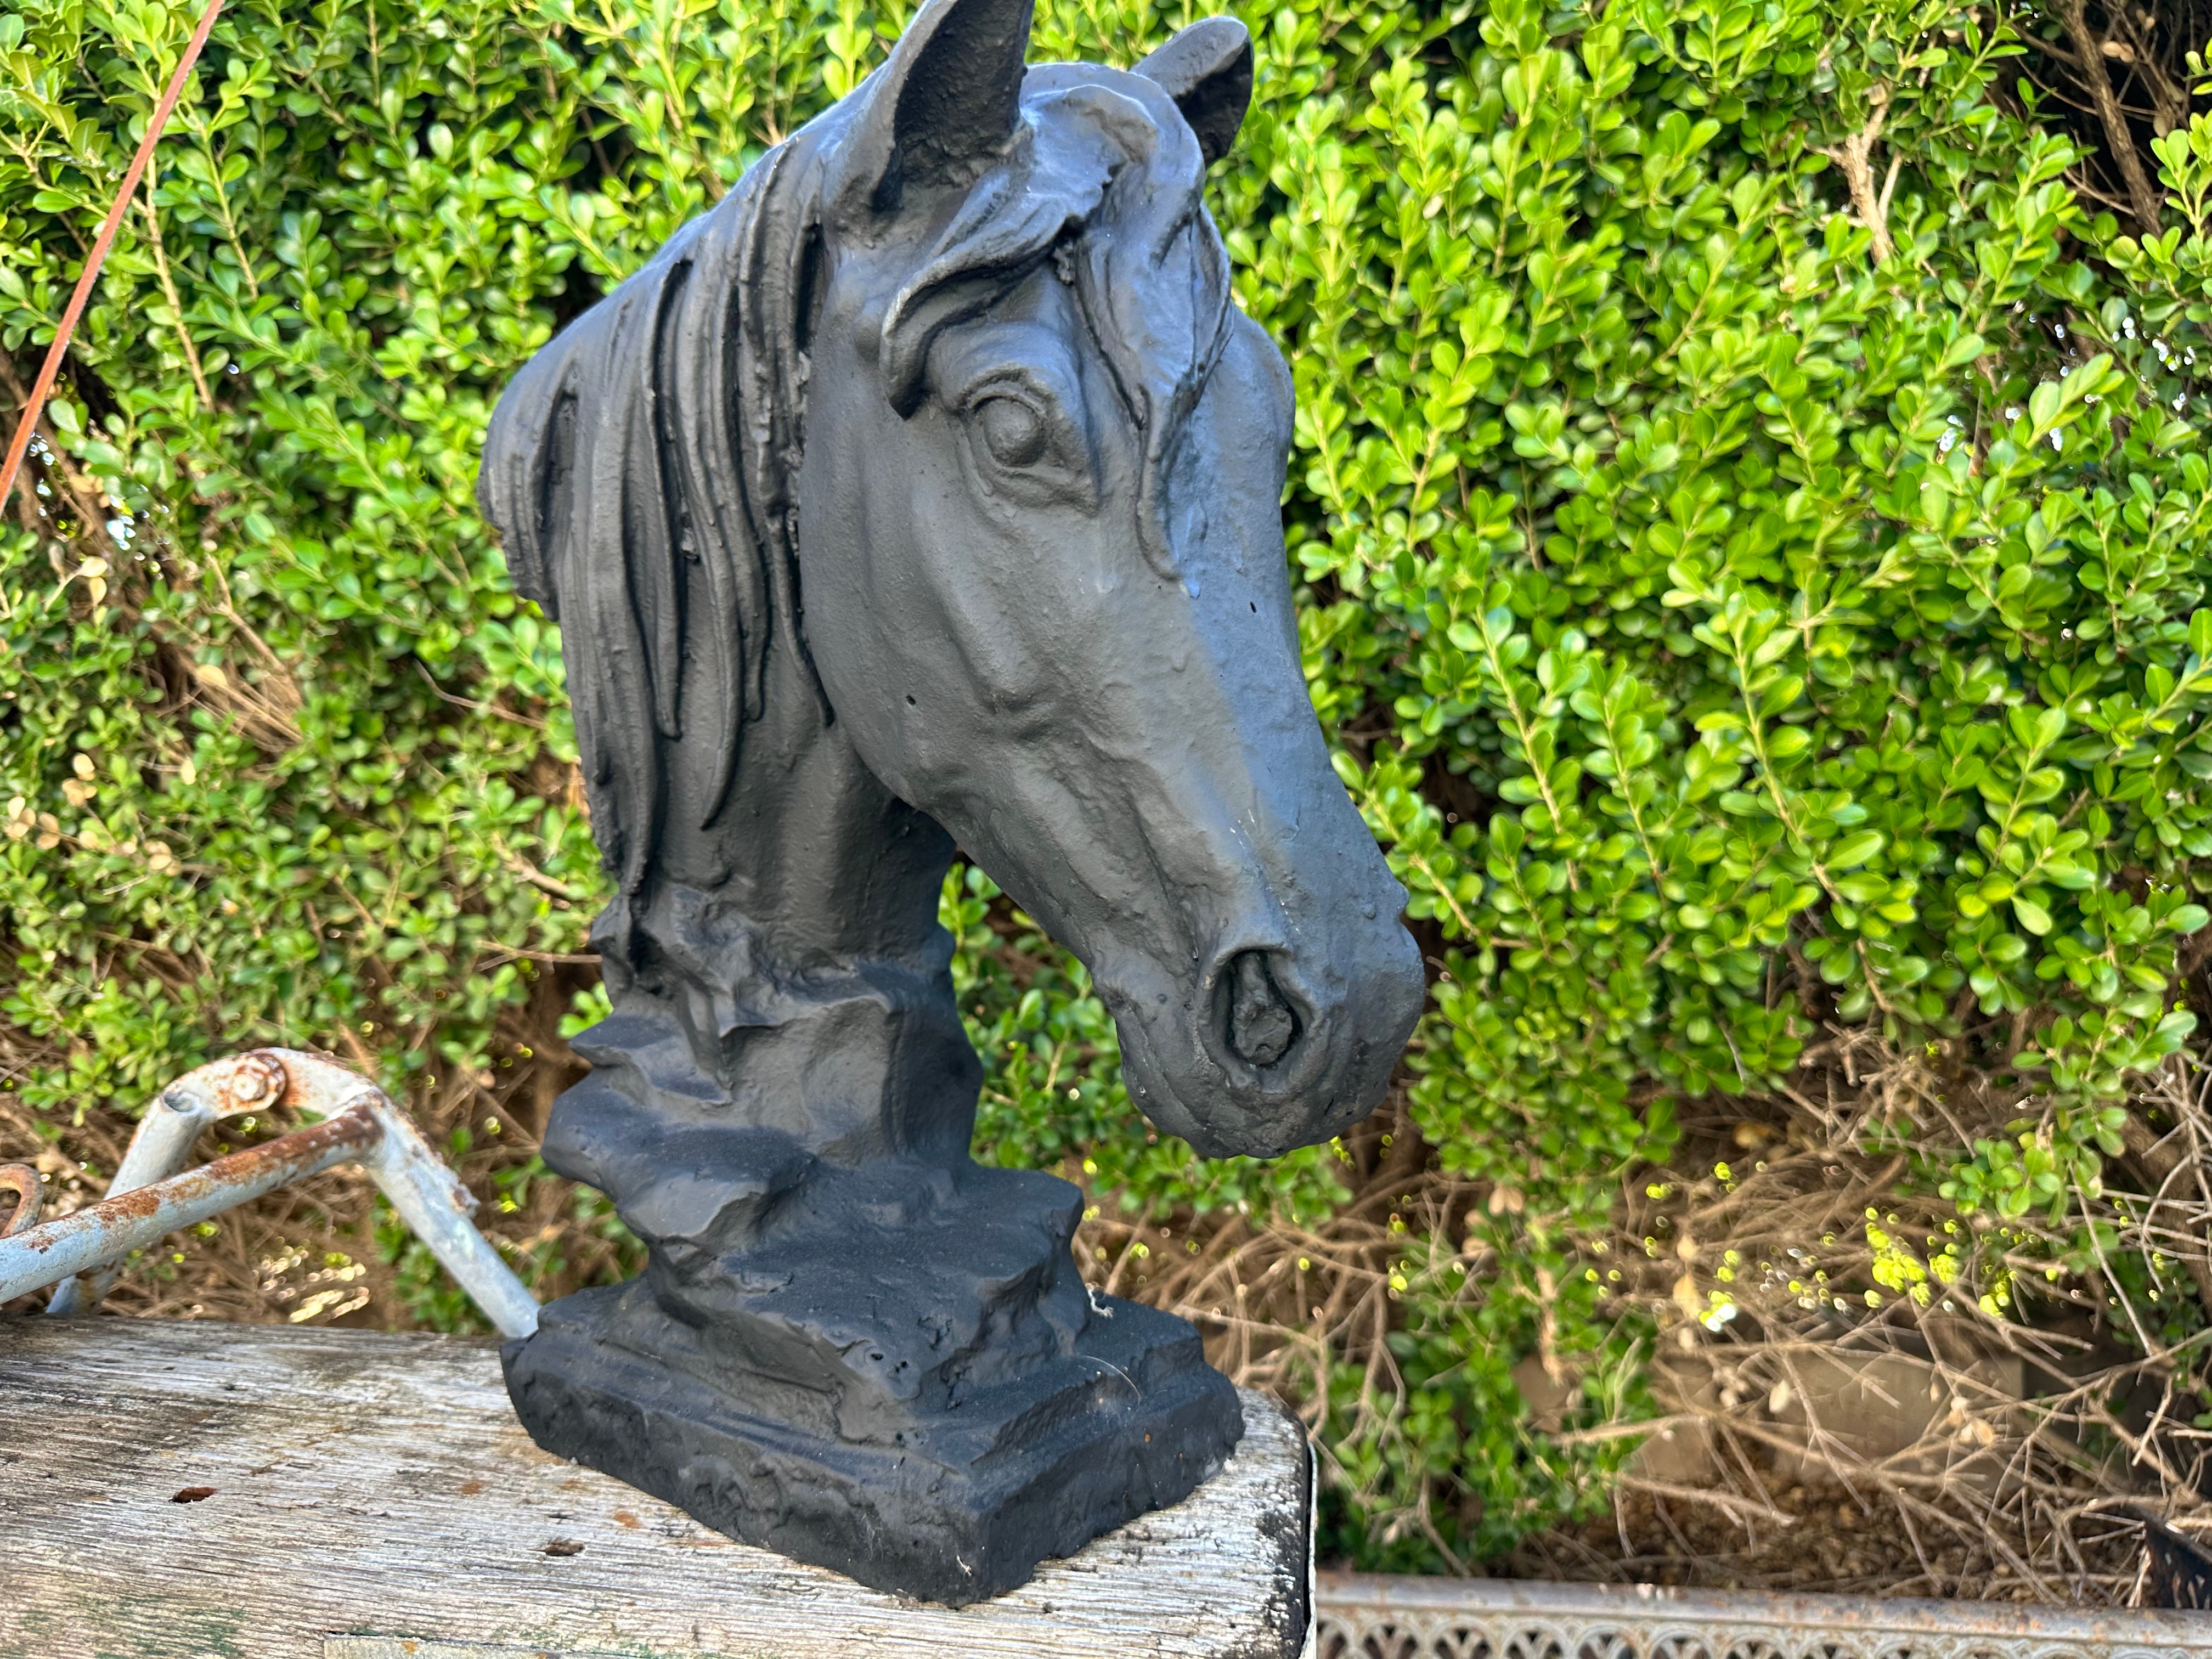 XL CAST IRON HORSE HEAD Black